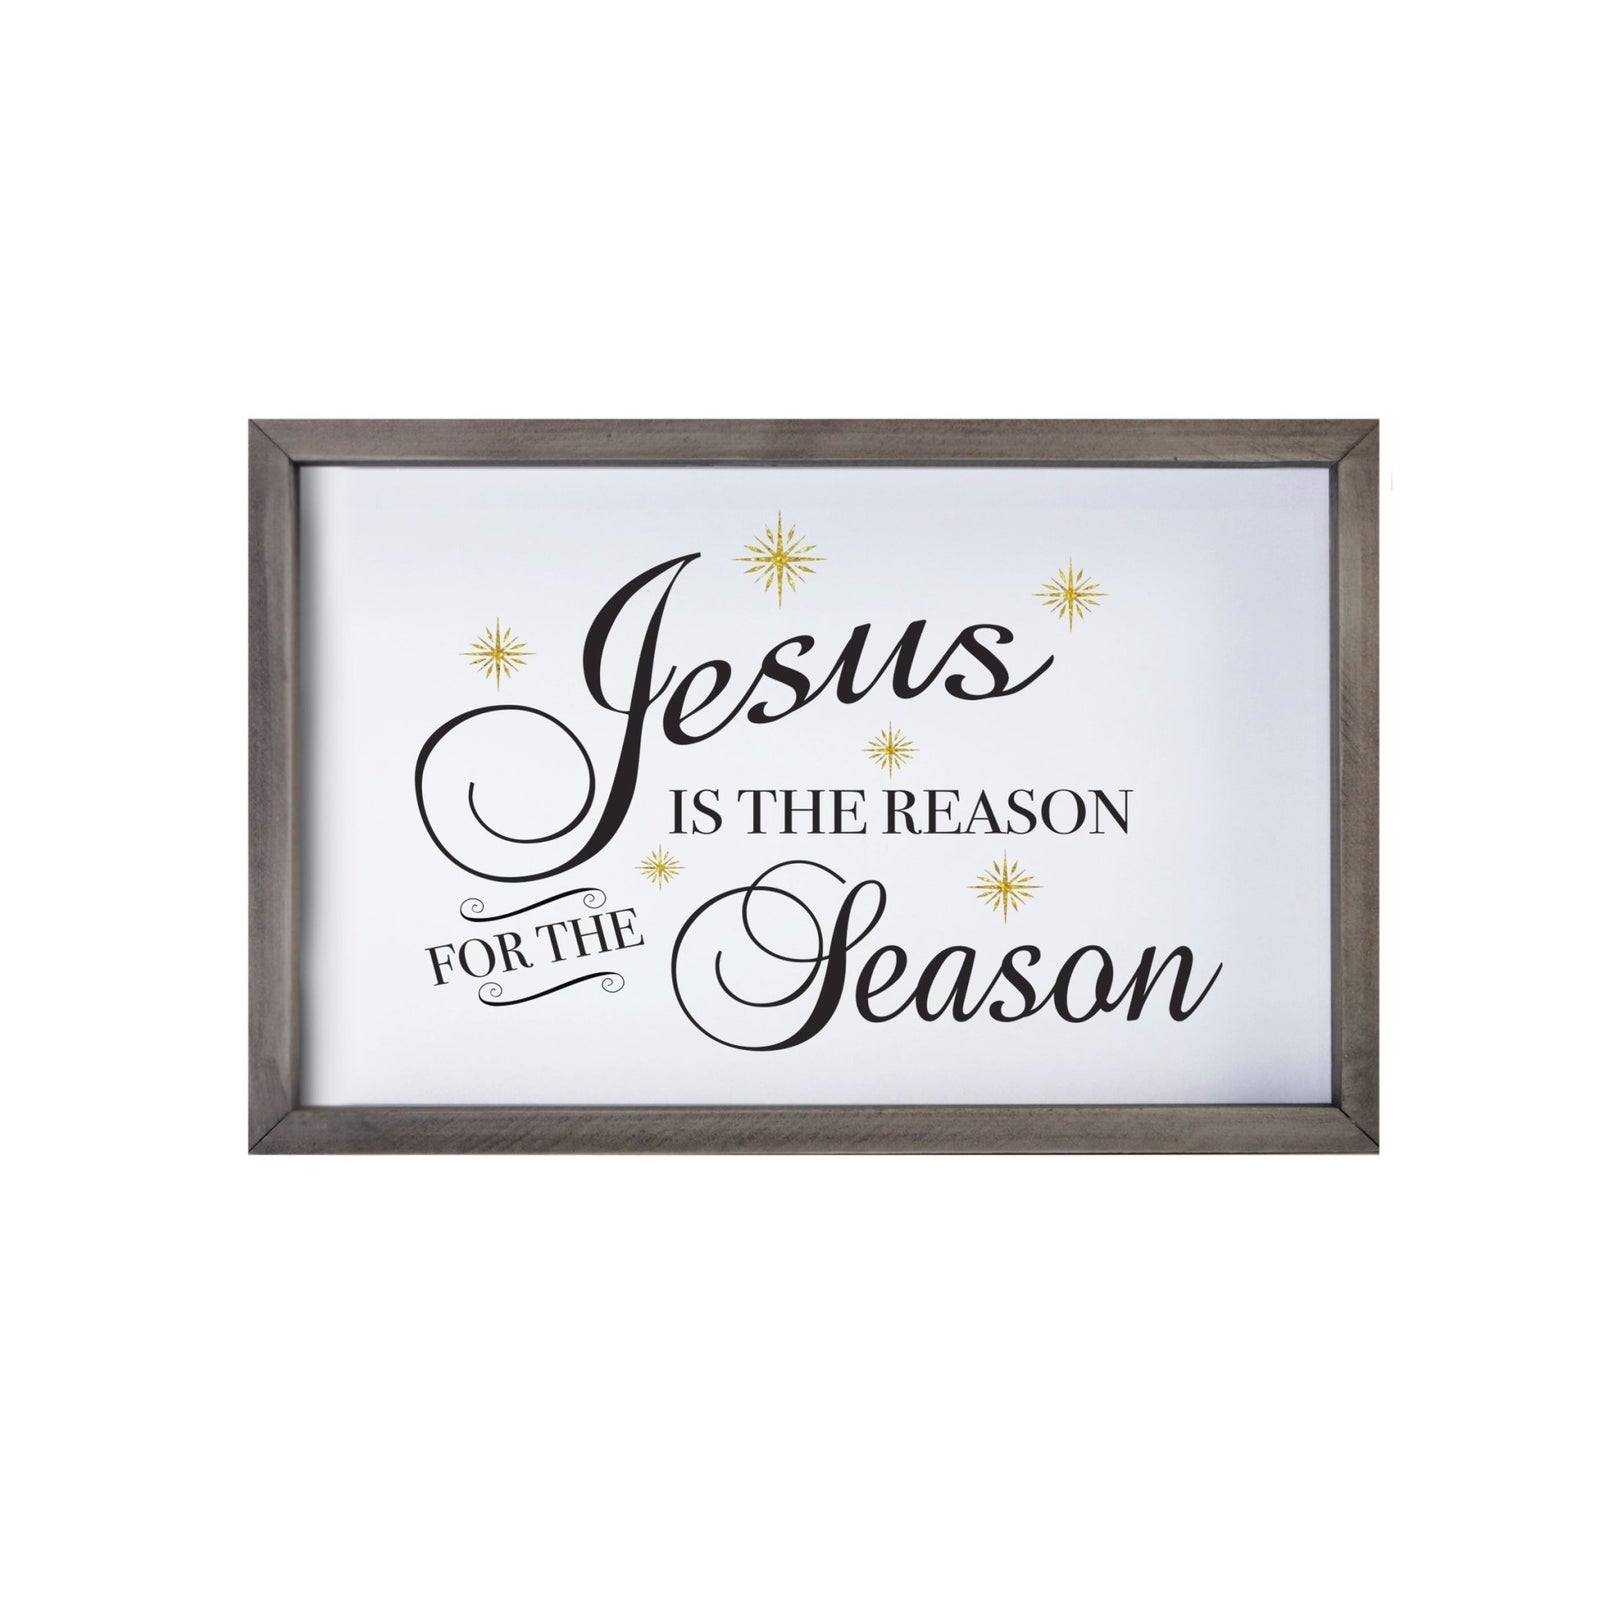 Merry Christmas Framed Shadow Box - Jesus Is The Reason - LifeSong Milestones